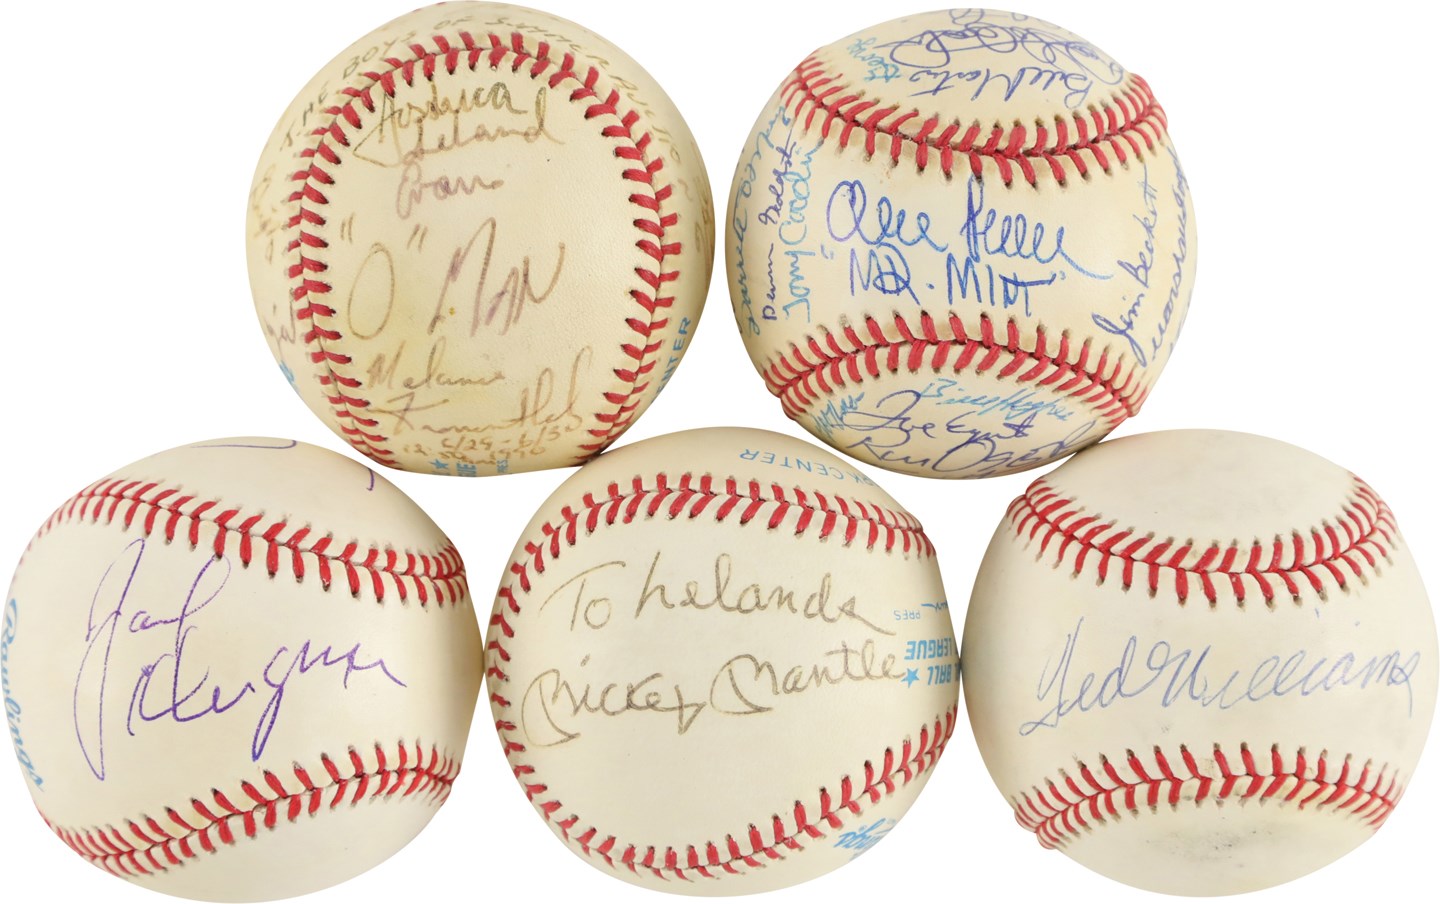 Baseball Autographs - The Joshua Leland Evans Signed Baseball Collection